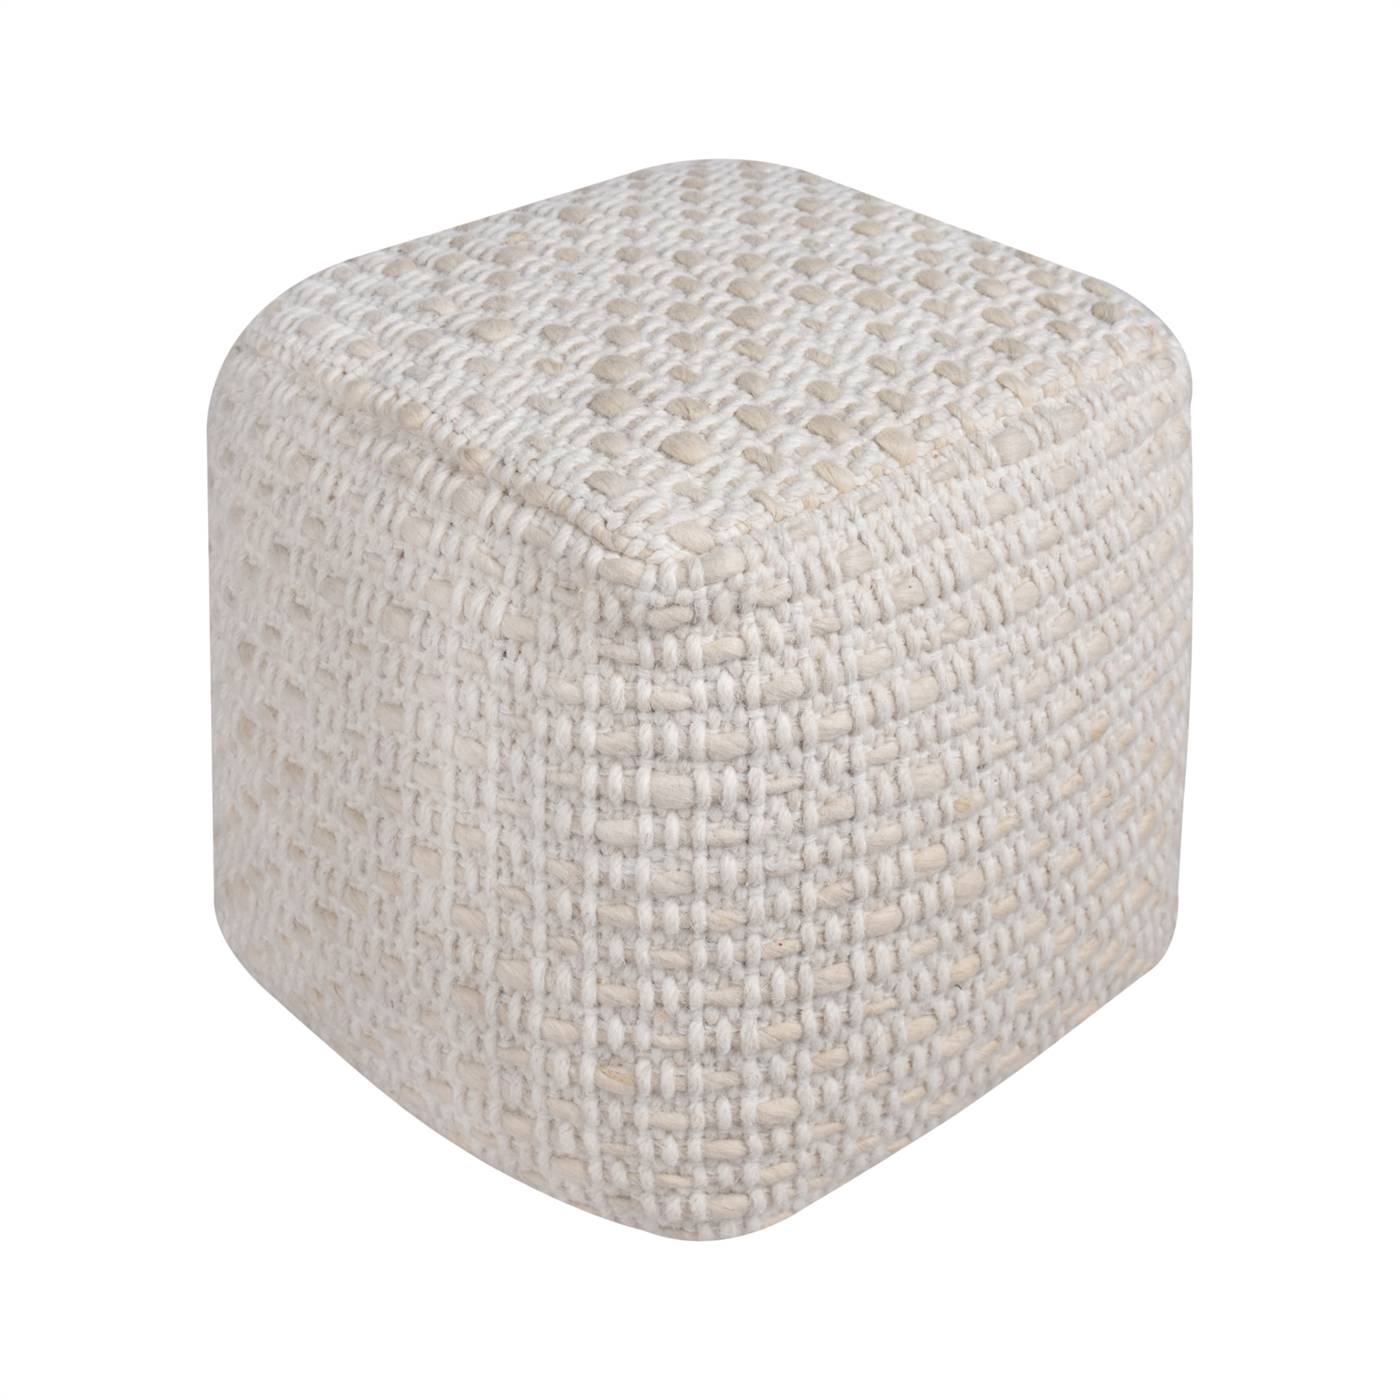 Brenda-II Pouf, 40x40x40 cm, Natural White, Wool, Hand Woven, Pitloom, Flat Weave